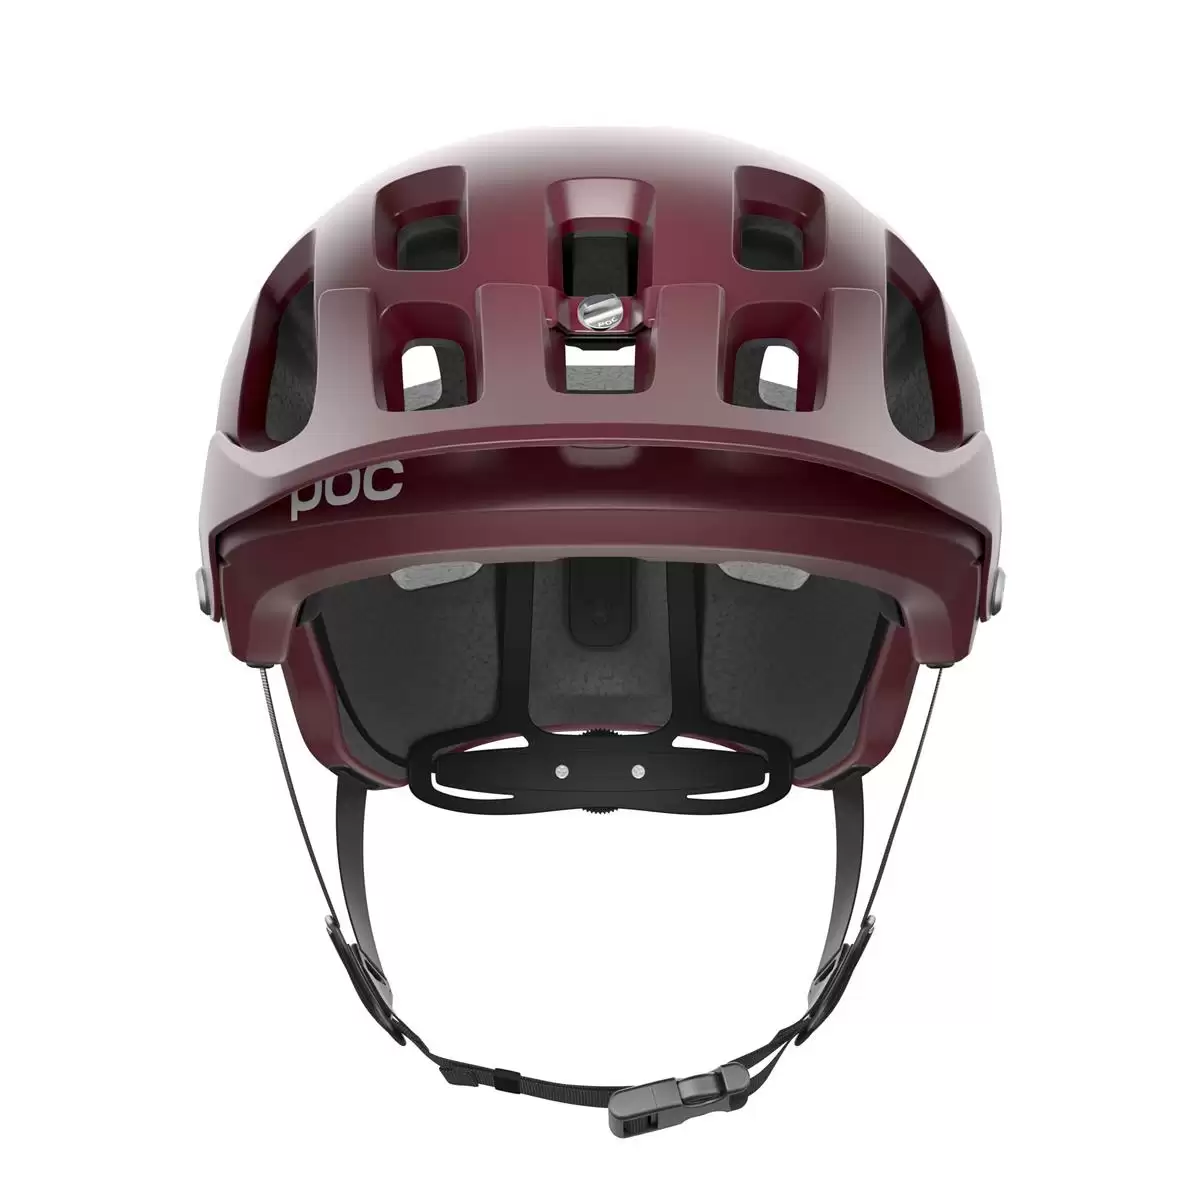 Enduro Helmet Tectal Propylene Red Matt size XS-S (51-54cm) #1